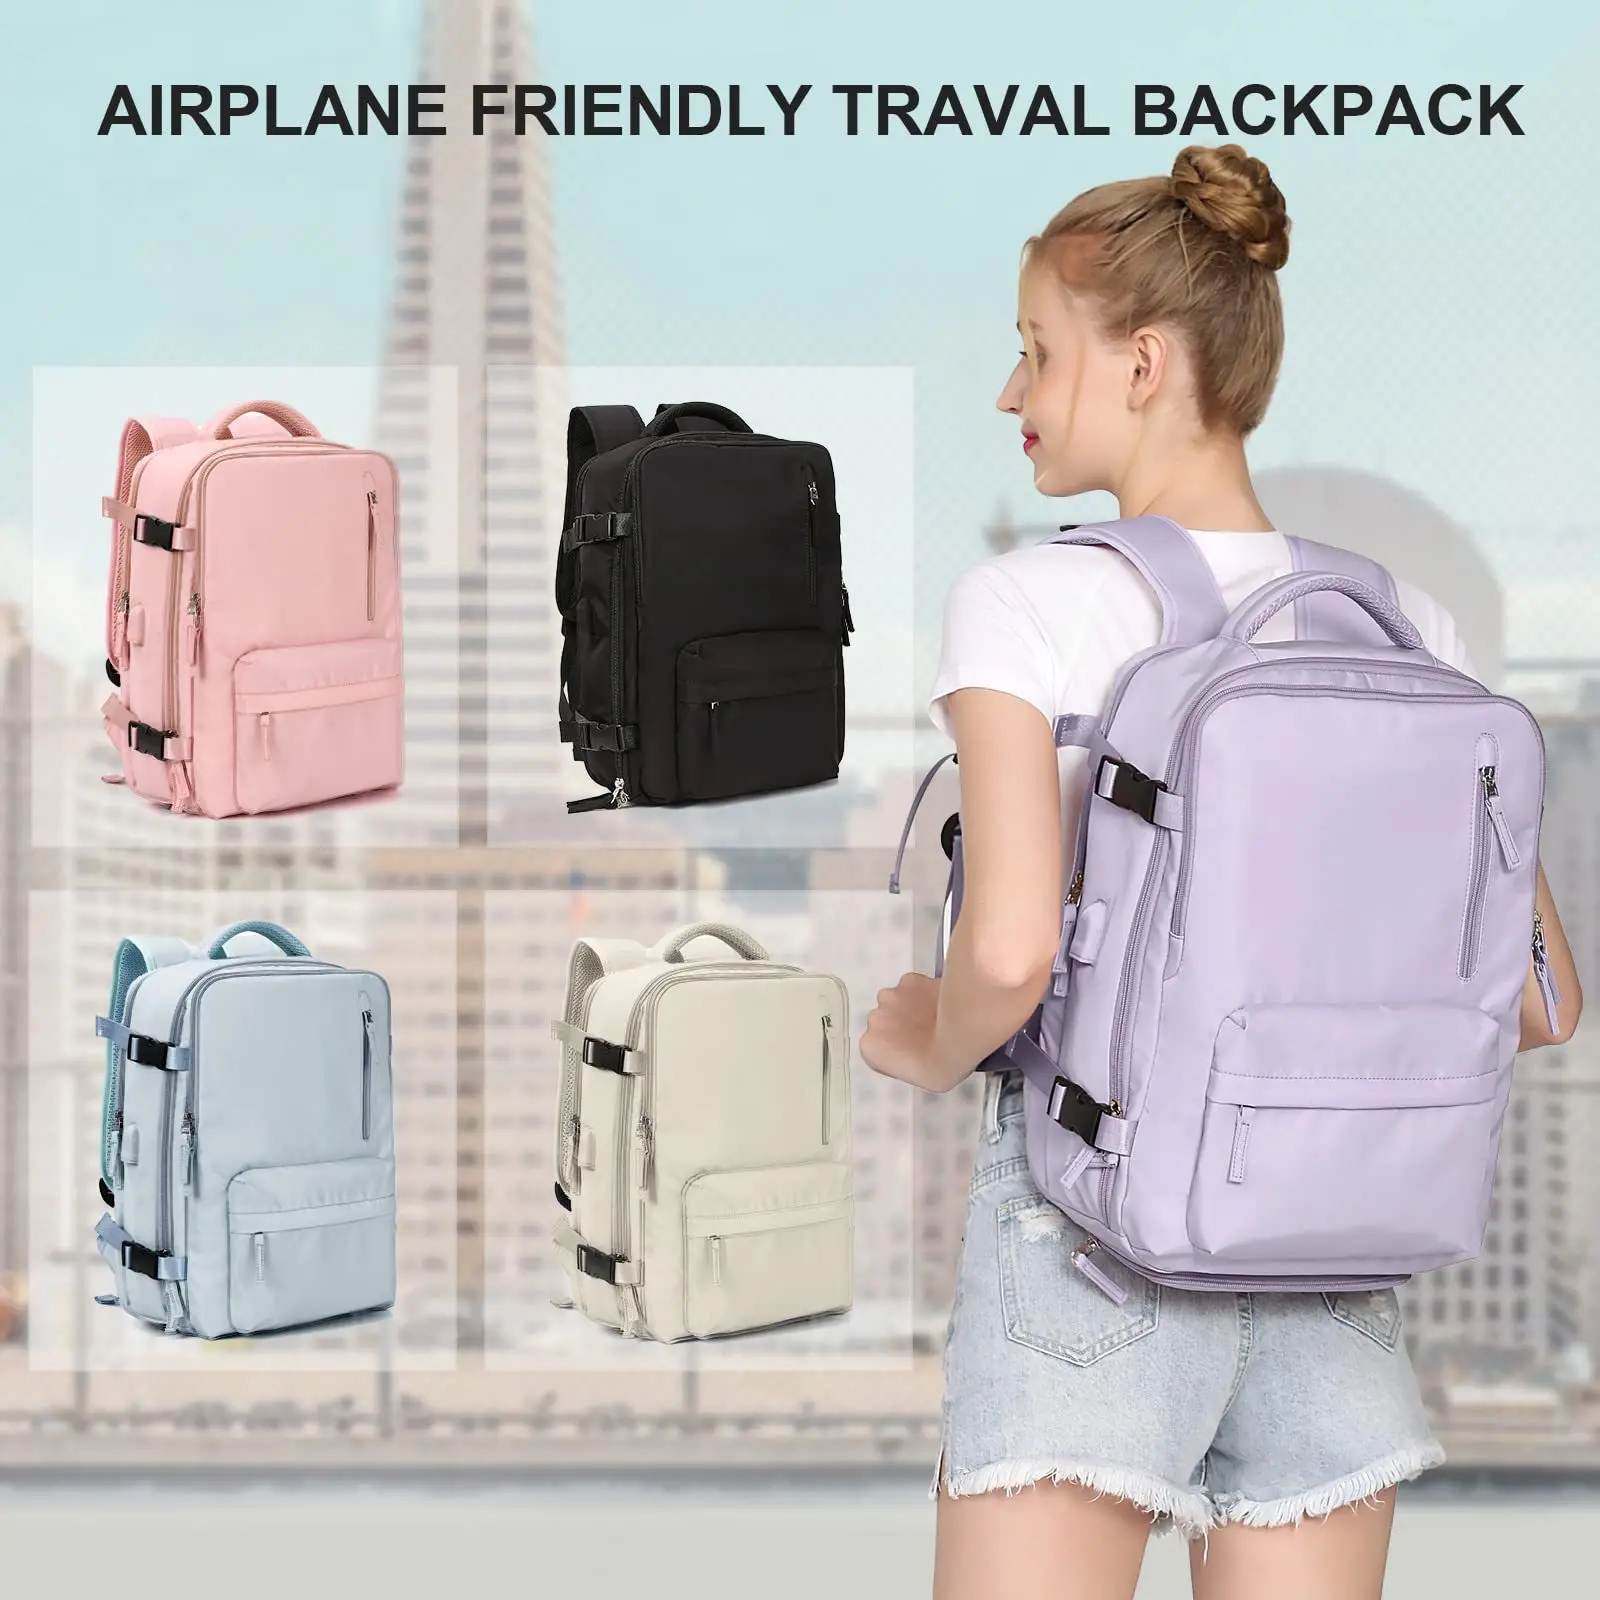 

Multifunctional Travel Backpack Woman Airplane Luggage Bagpacks Large Capacity Women's Bags Lightweight Suitcase USB Charging